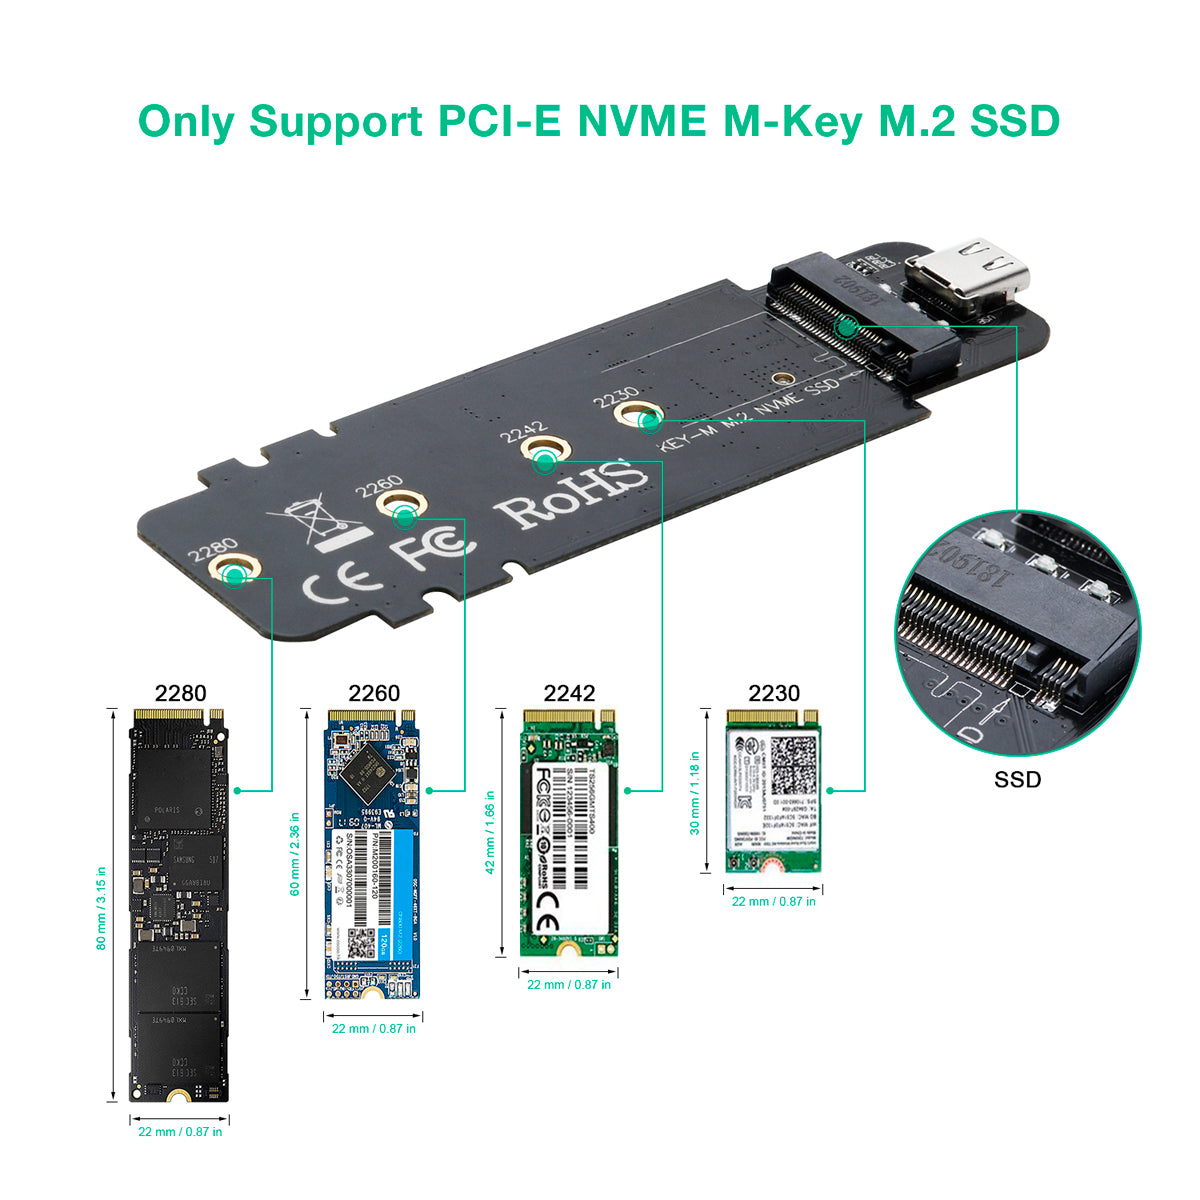 Lector de SSD PC-HDE02 M.2 a USB compatible con M-Key (basado en PCI-E NVMe)